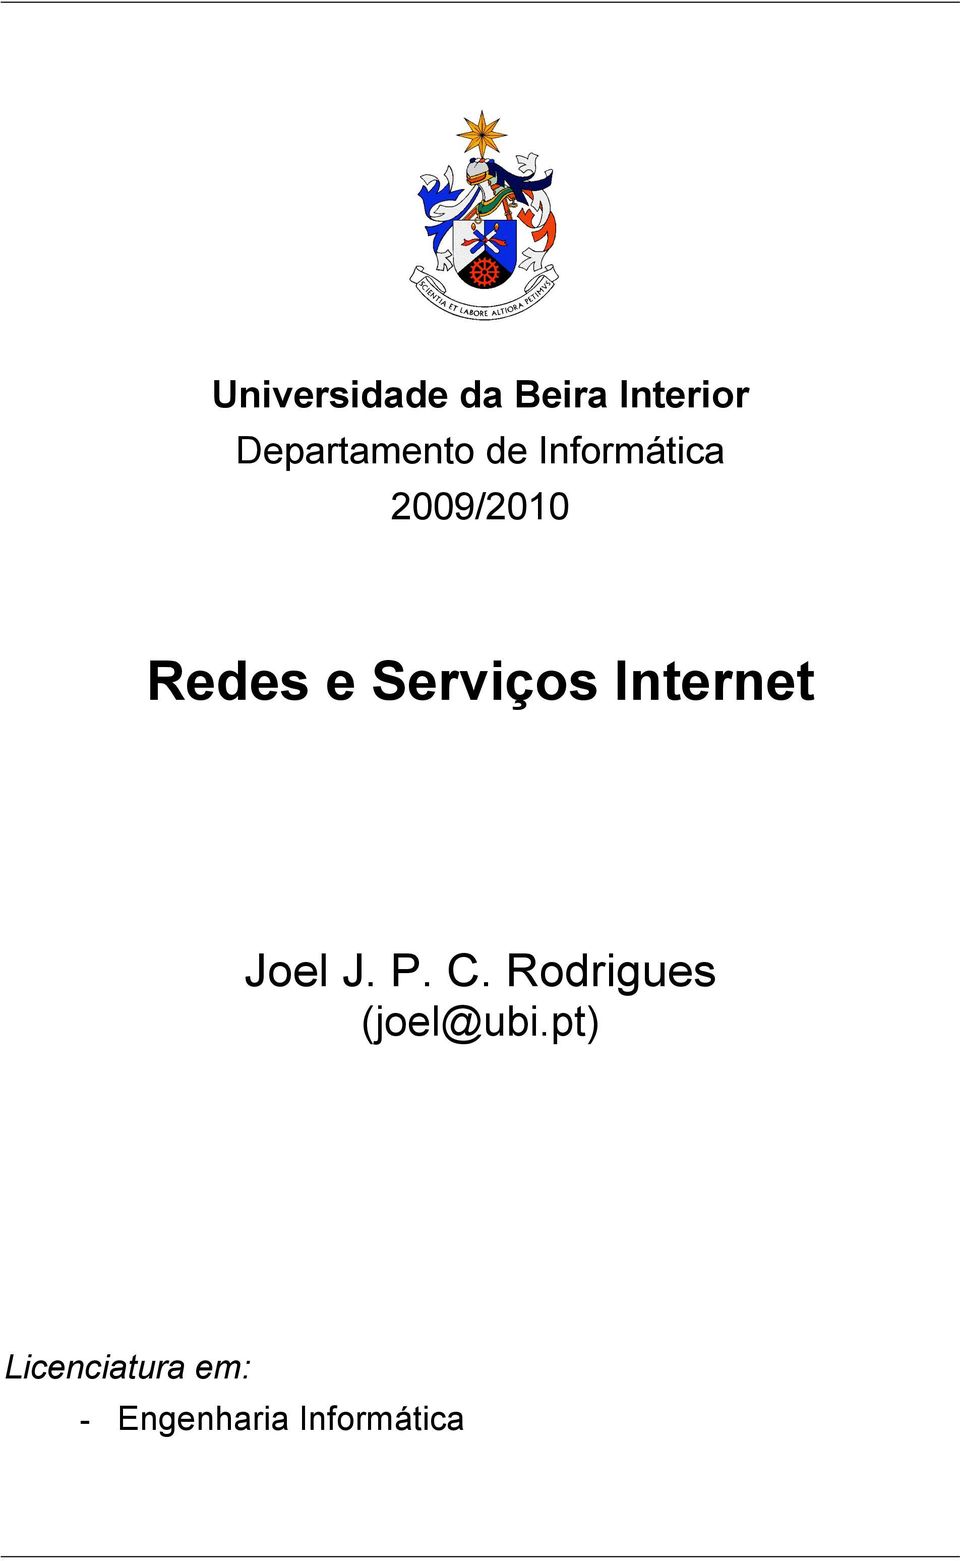 Internet Joel J. P. C. Rodrigues (joel@ubi.